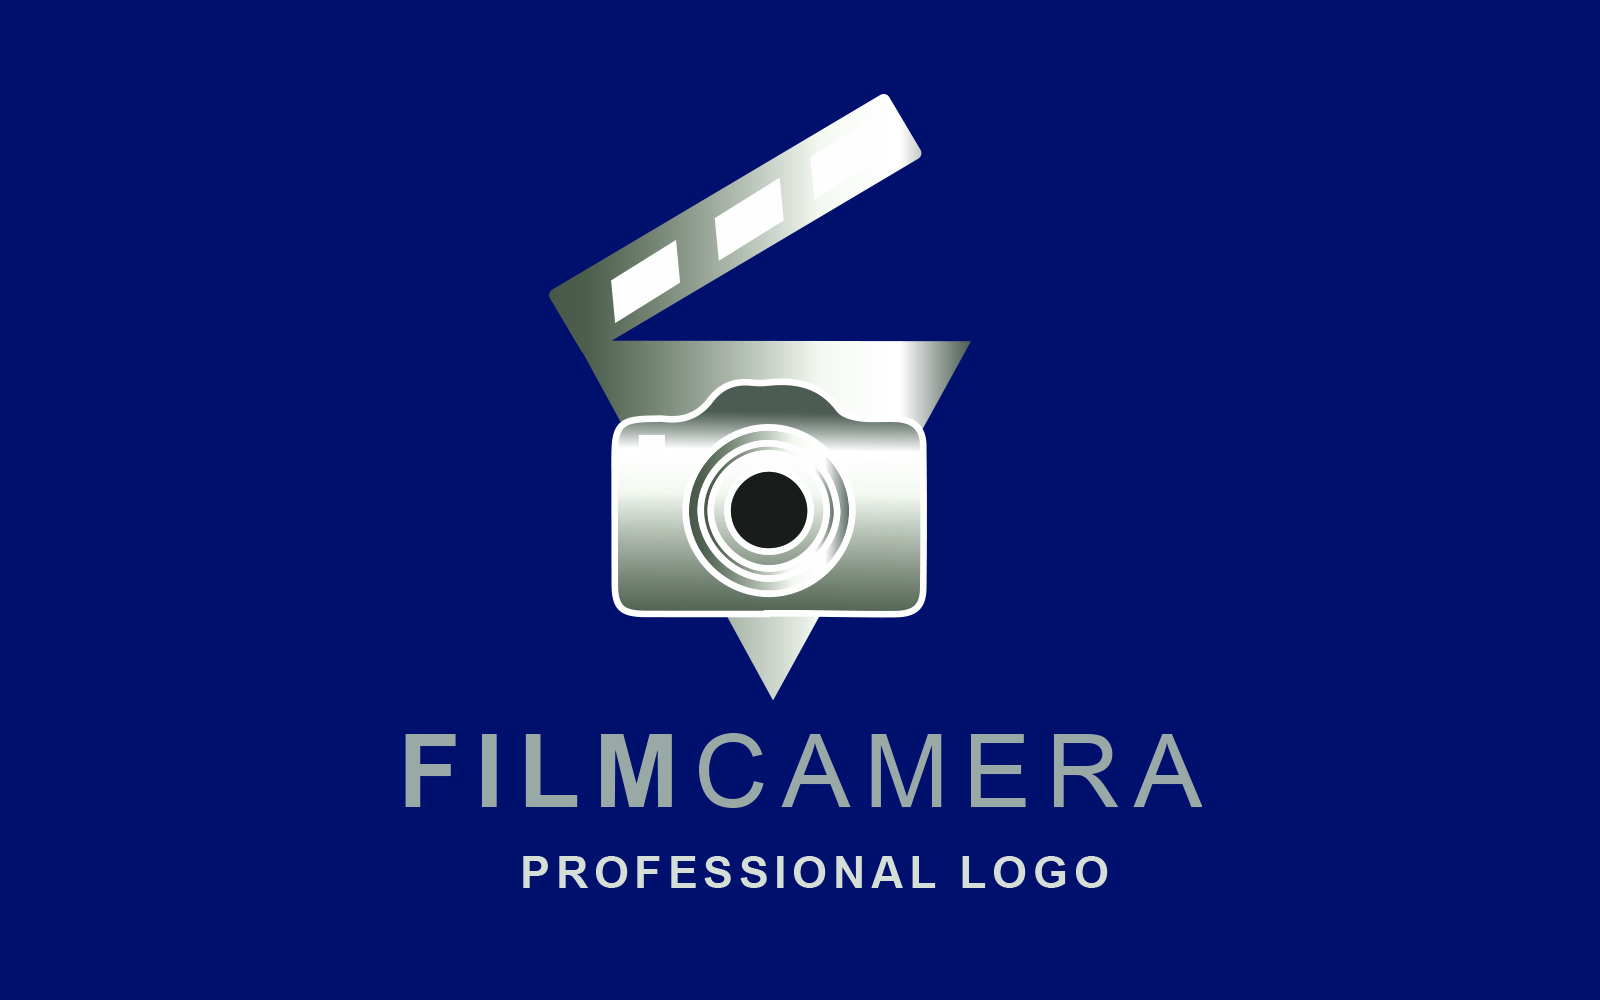 Film Camera Professional Logo